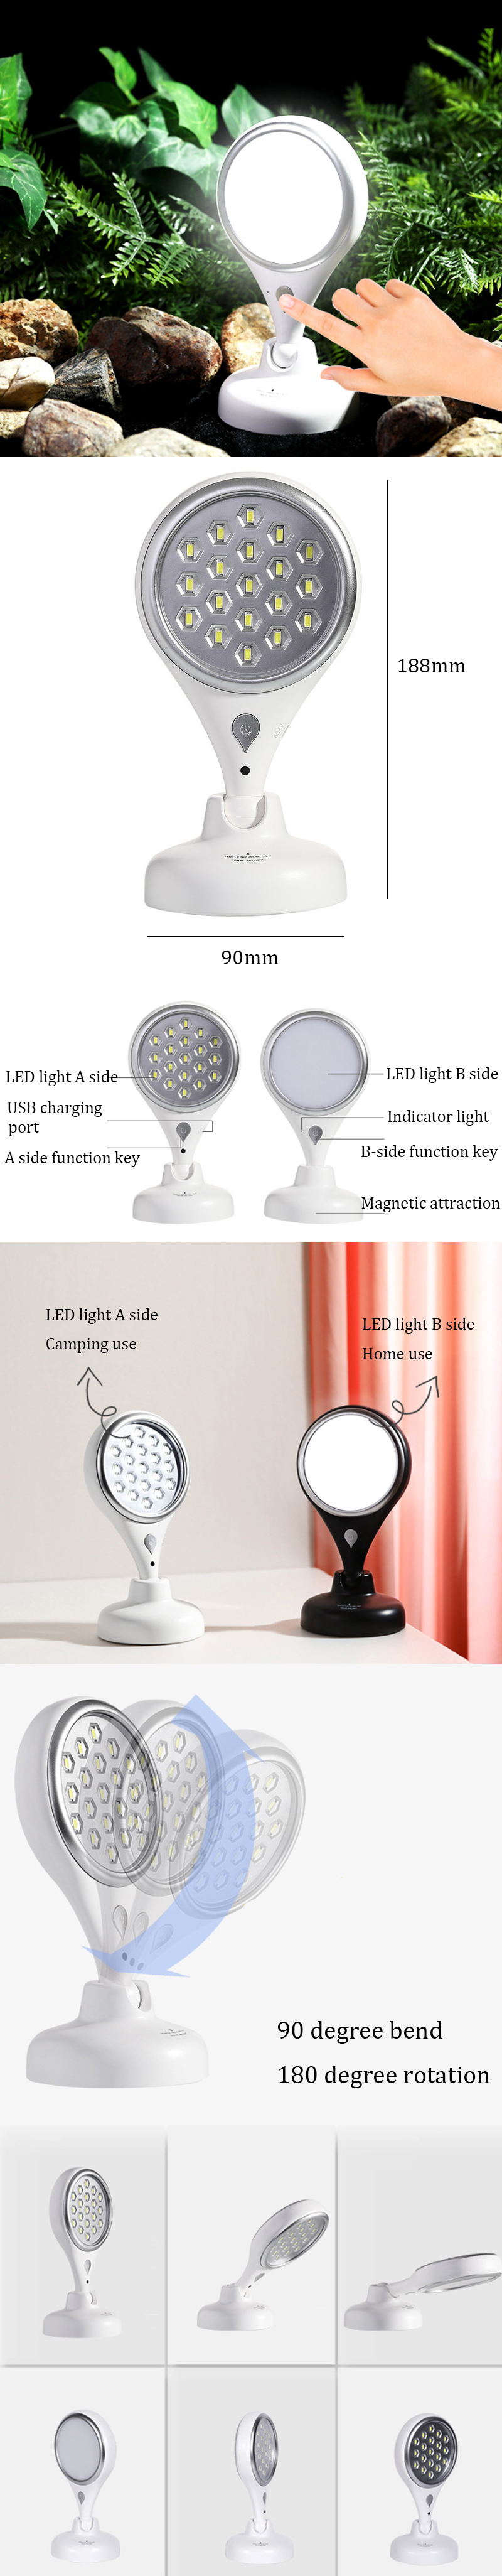 IPReereg-15W-75LM-LED-USB-Camping-Tent-Dimming-Light-5-Modes-Outdoor--Emergency-Warning-Lantern-1427956-1